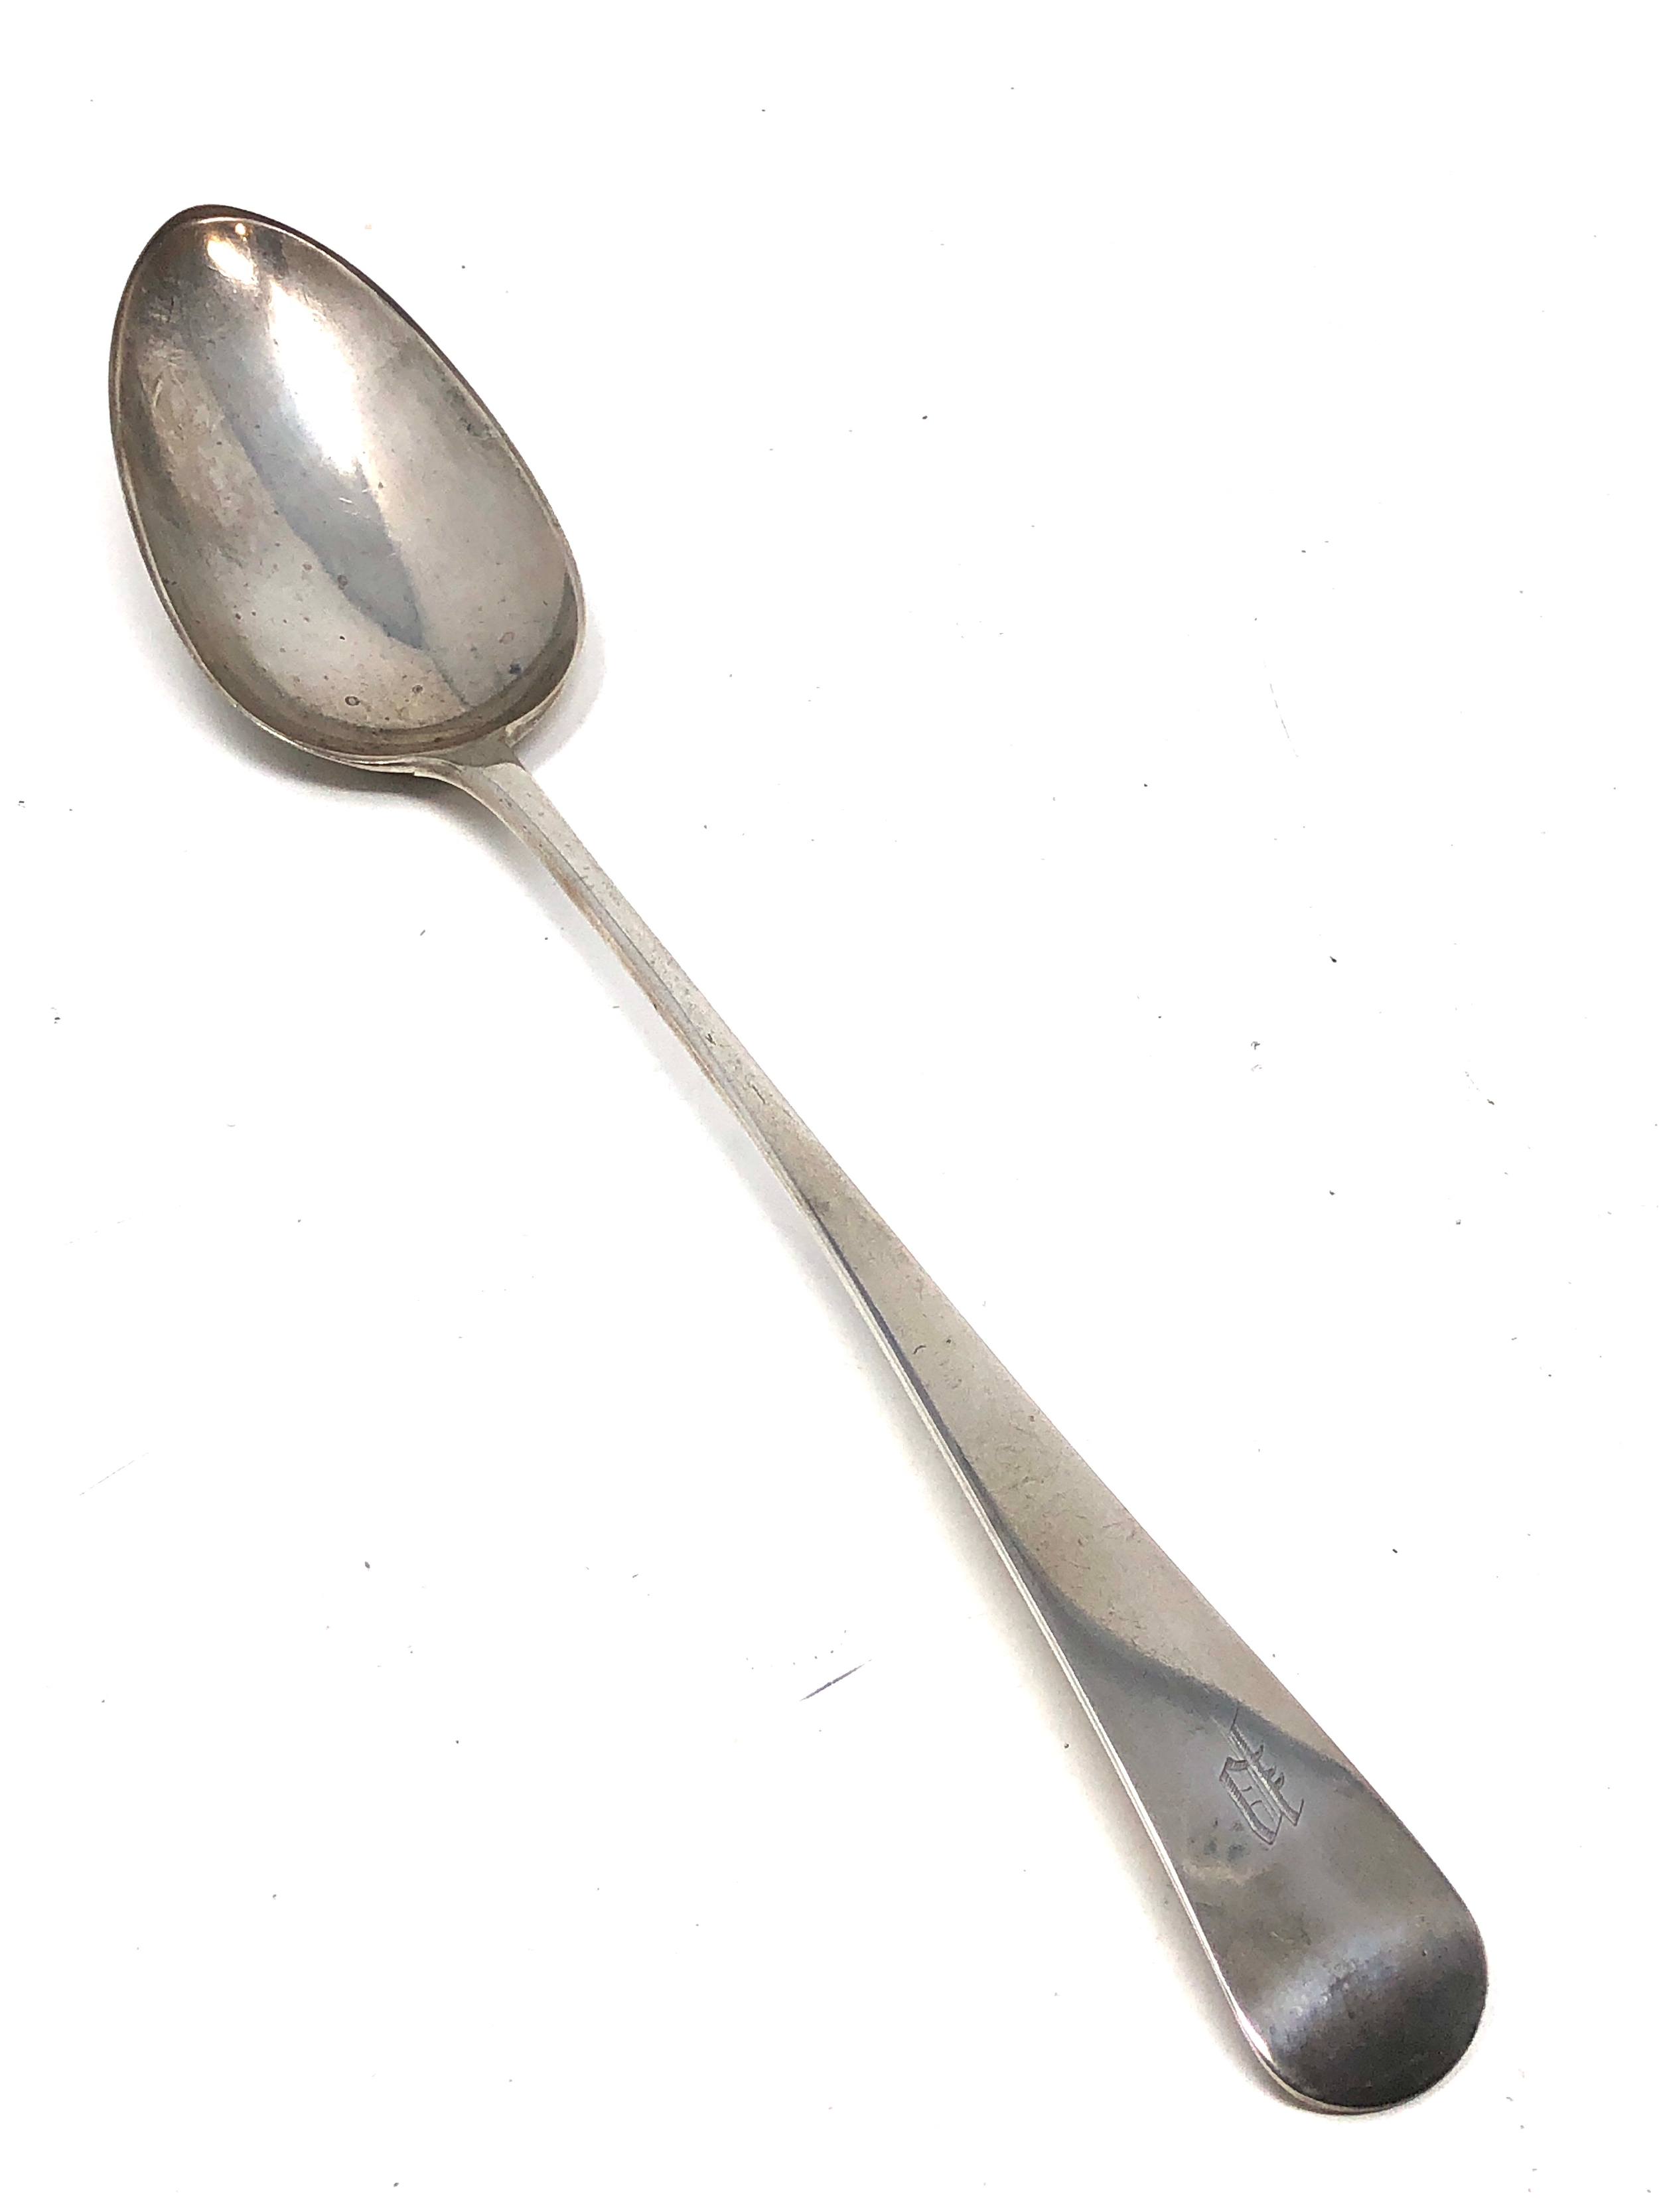 Antique georgian silver basting spoon measures approx 30cm long London silver hallmarks